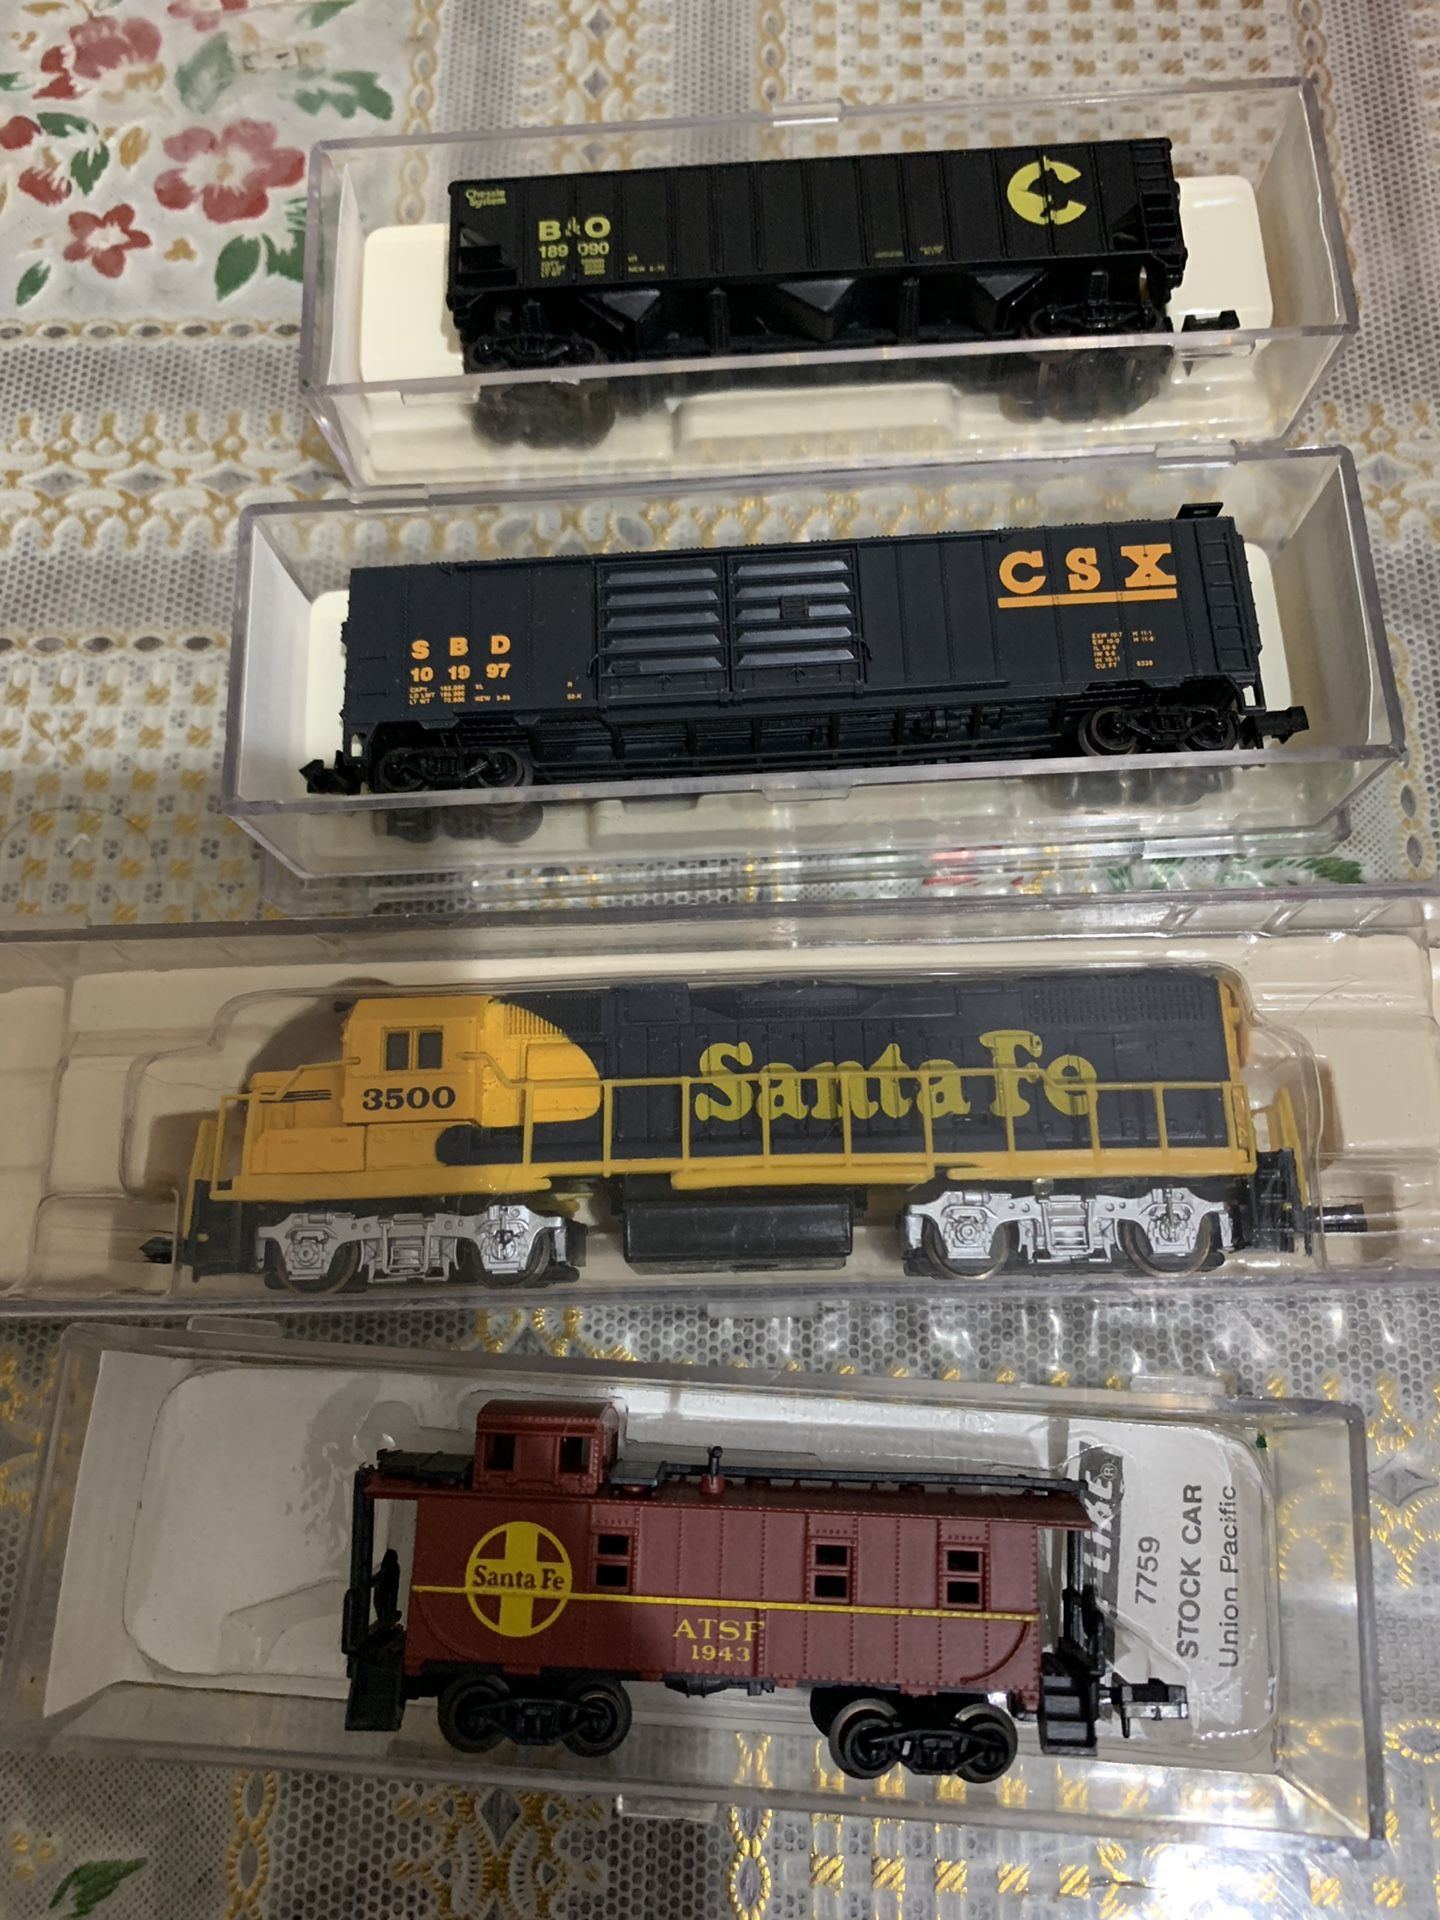 Santa Fe trains set